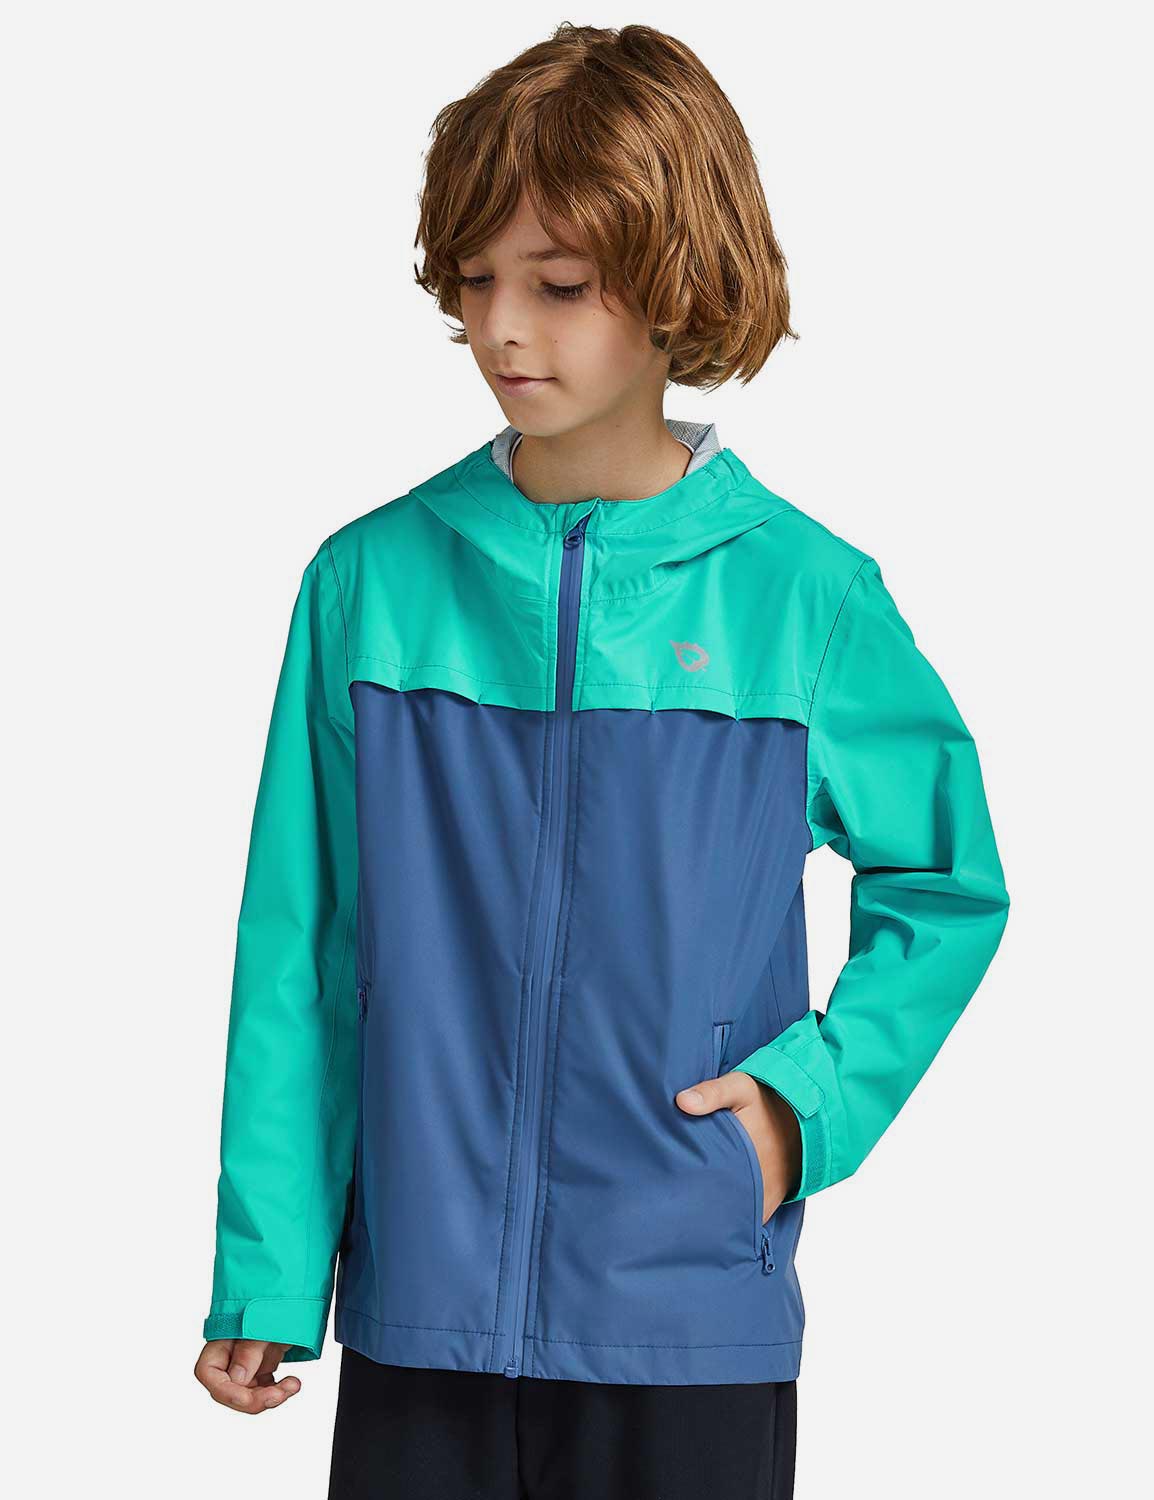 Baleaf Kid's Waterproof Outdoor Hooded Cycling Rain Jacket cai037 Navy/Green Front